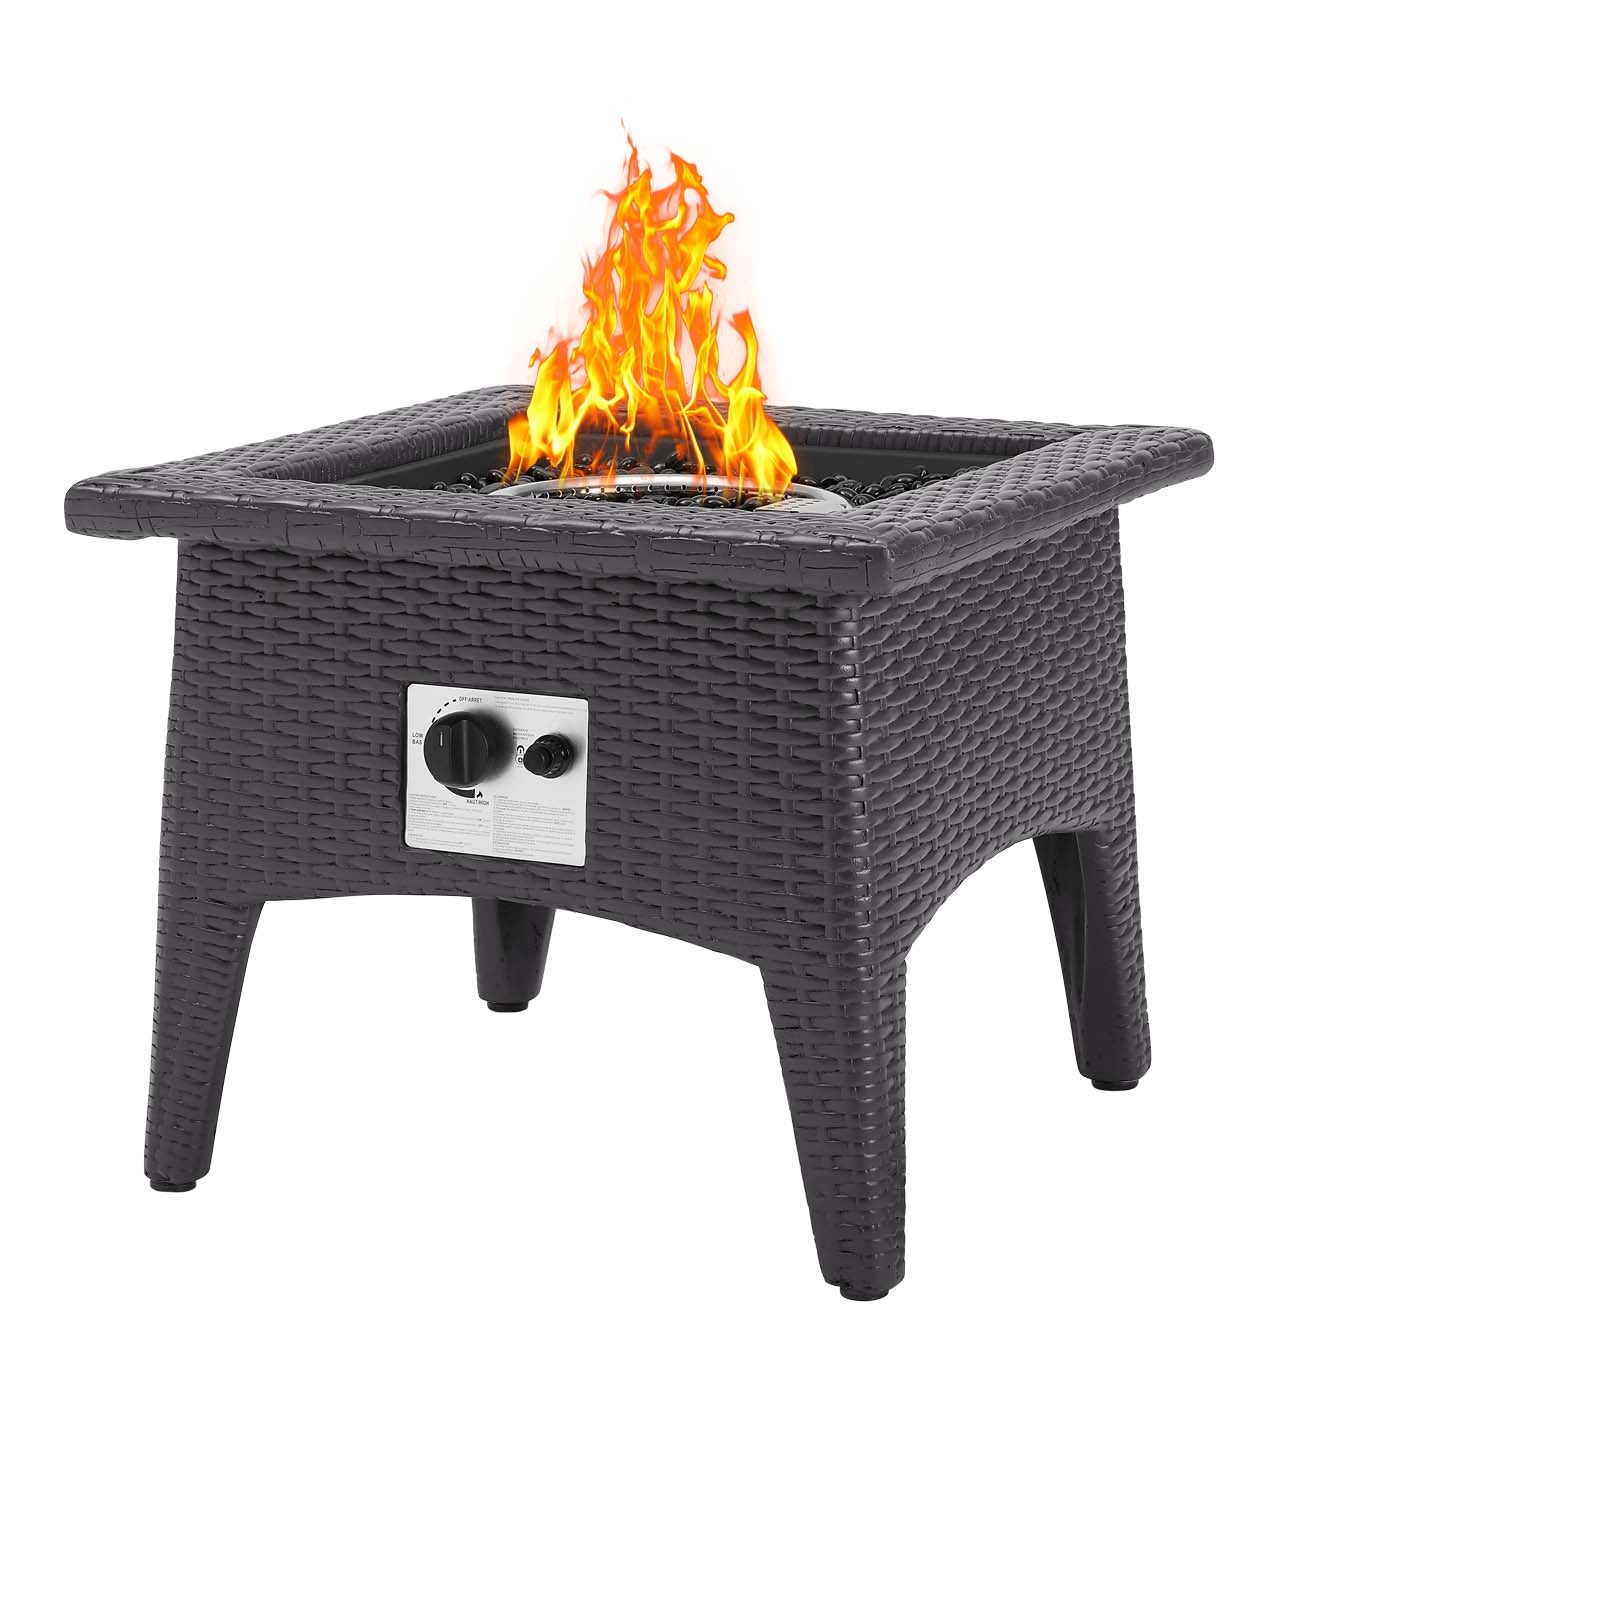 Modway Outdoor Bar Tables - Vivacity Outdoor Patio Fire Pit Table Espresso